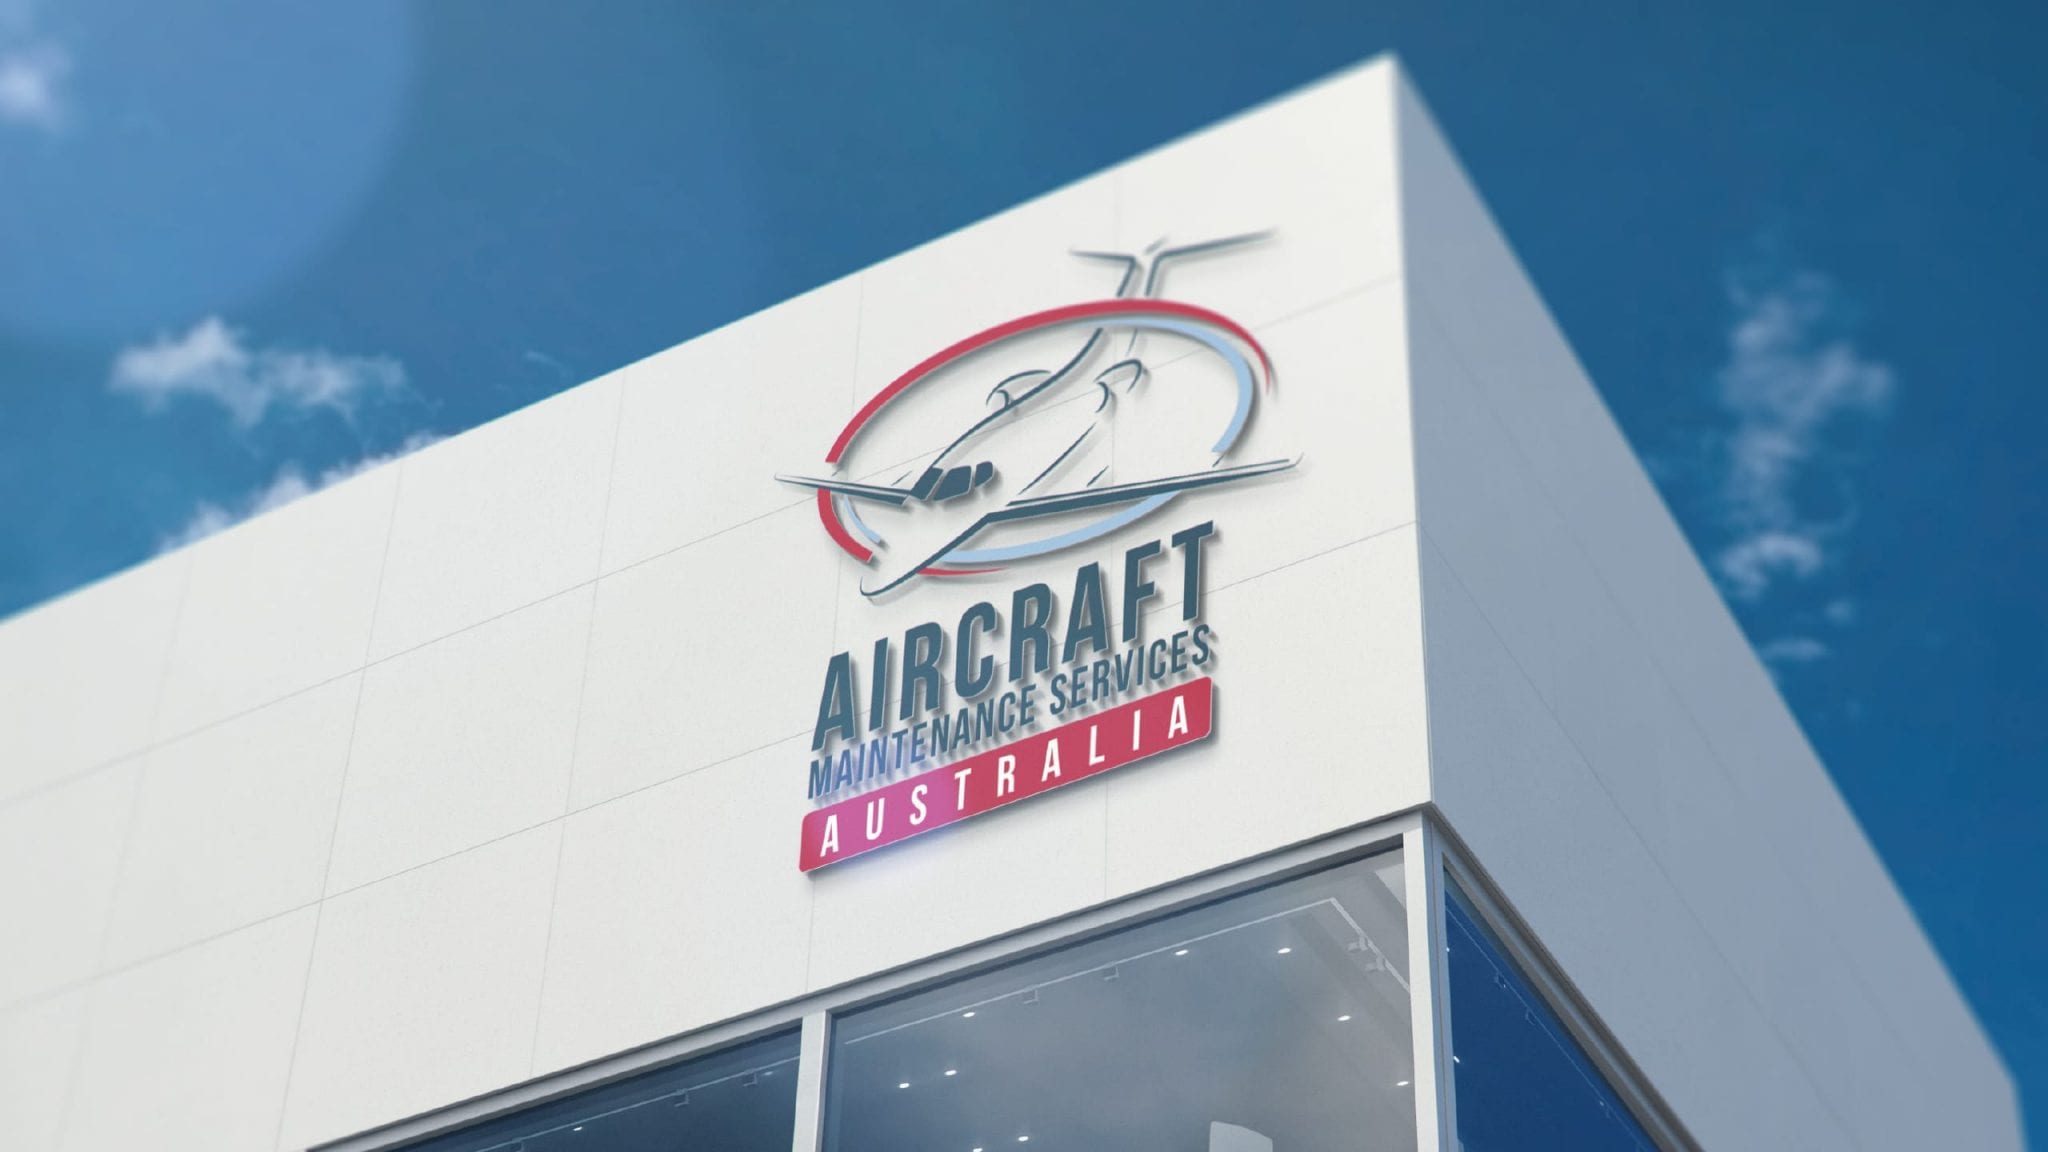 Aircraft Maintenance Services Australia